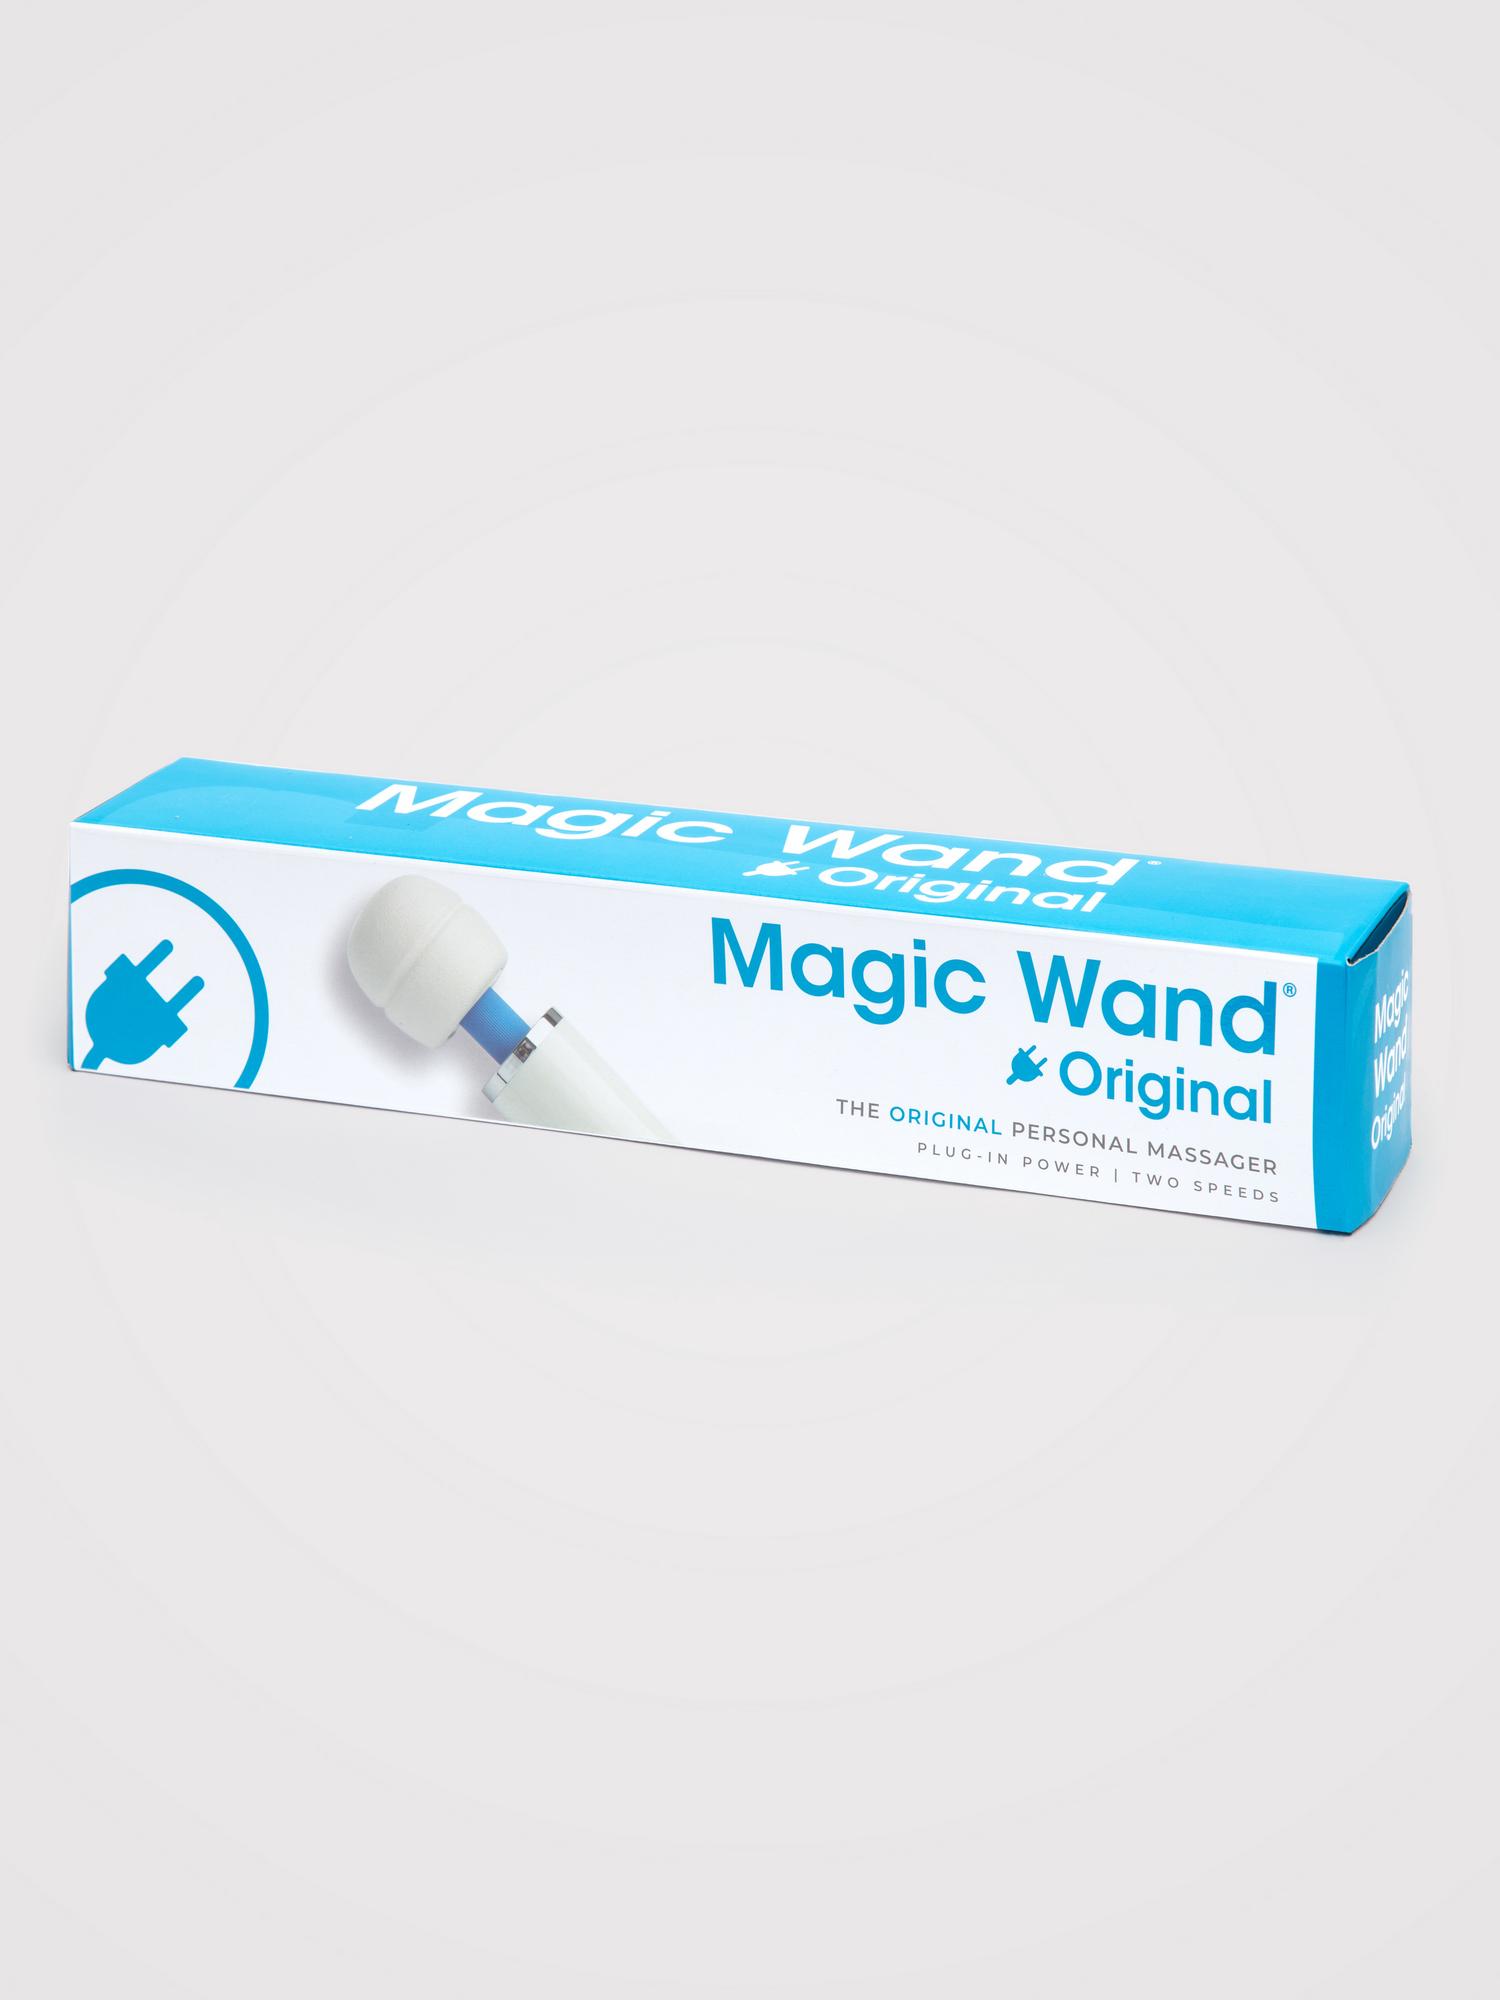 Magic Wand Original Vibrator. Slide 5